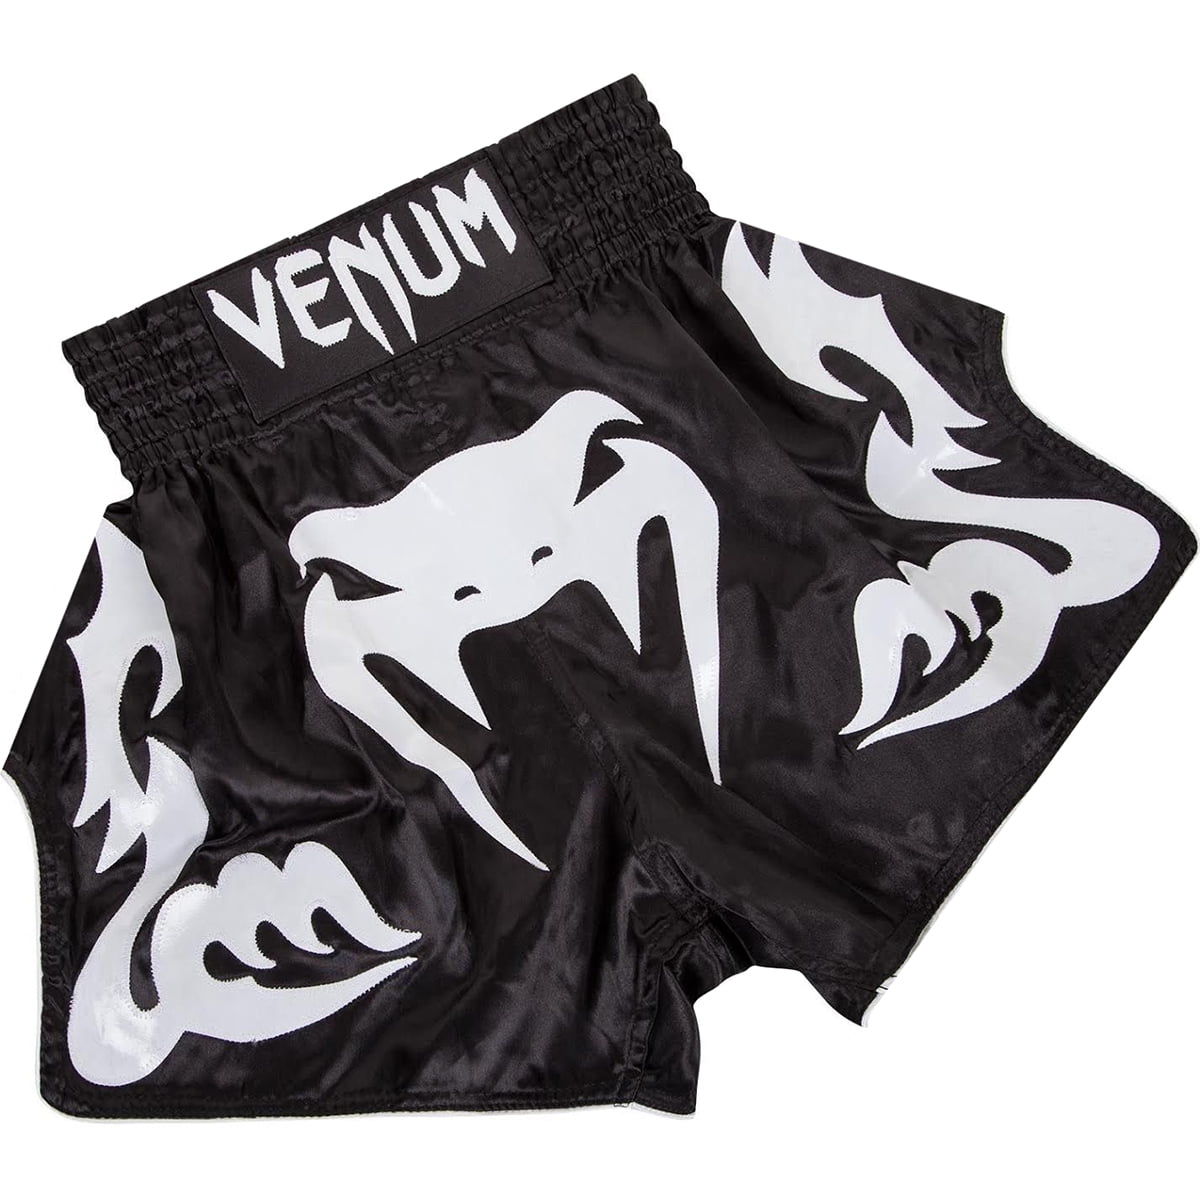 Venum Bangkok Inferno Muay Thai Shorts - Red Devil